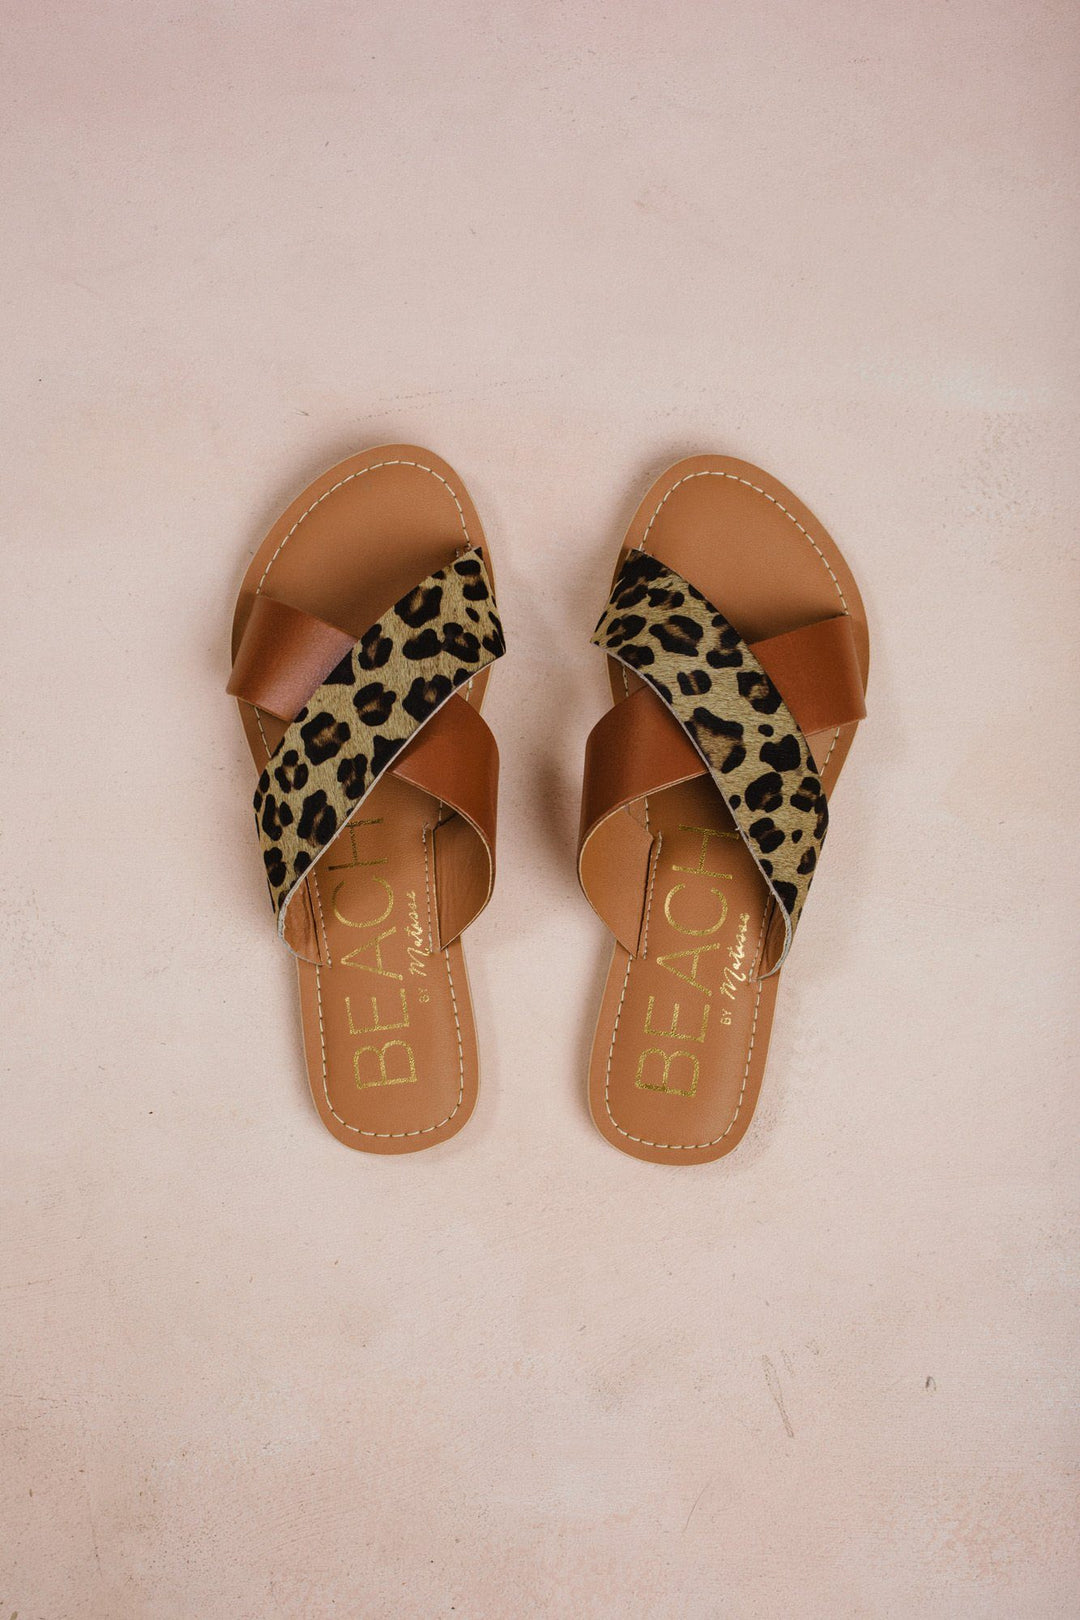 Matisse Pebble Sandals Shoes Morning Lavender Tan-Nat Leo 6 